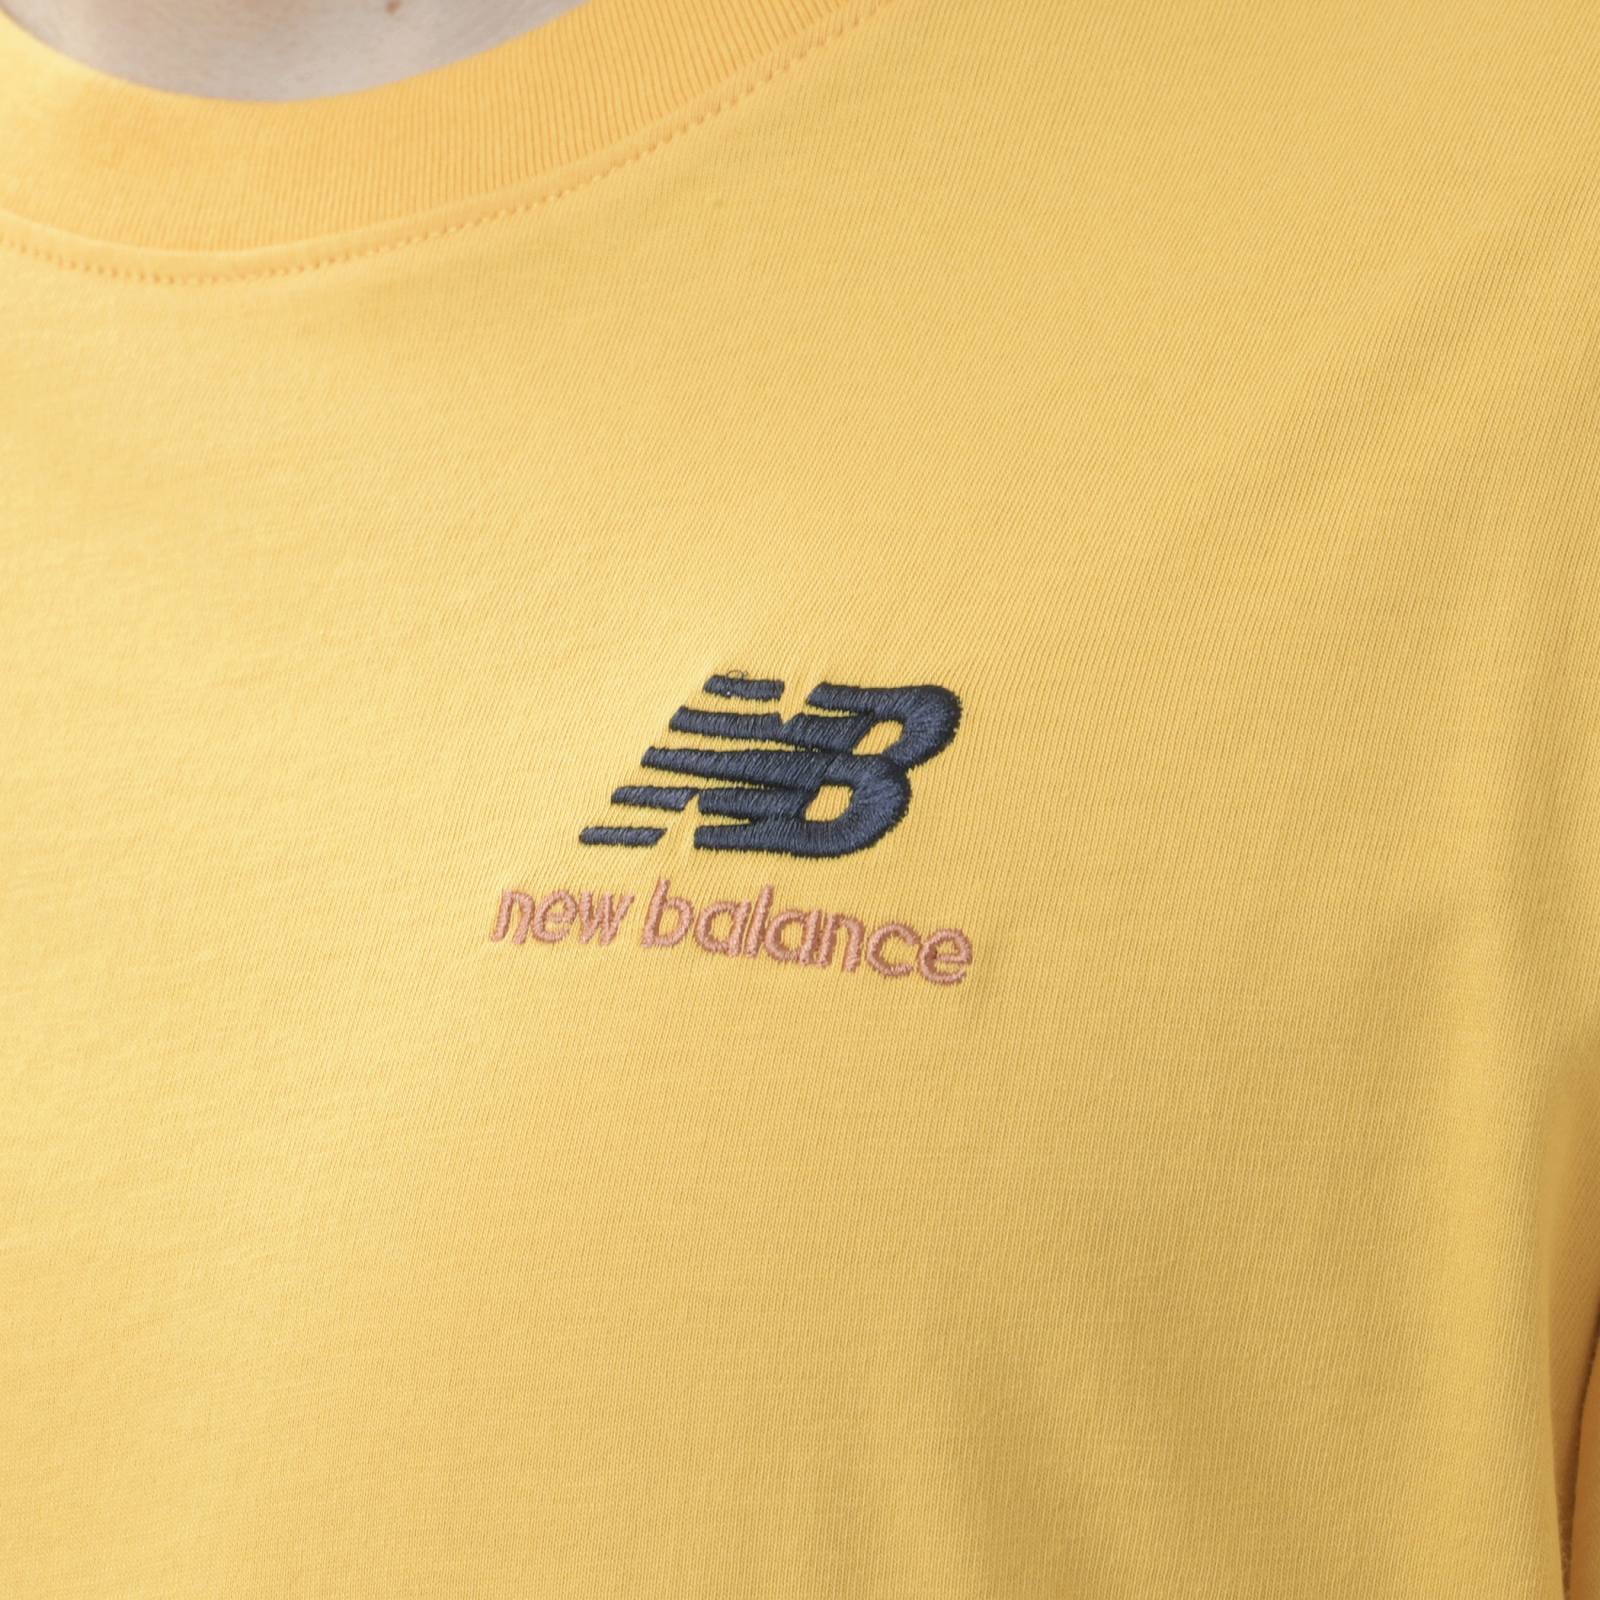 NB Essentials 刺しゅうロゴ Tシャツ